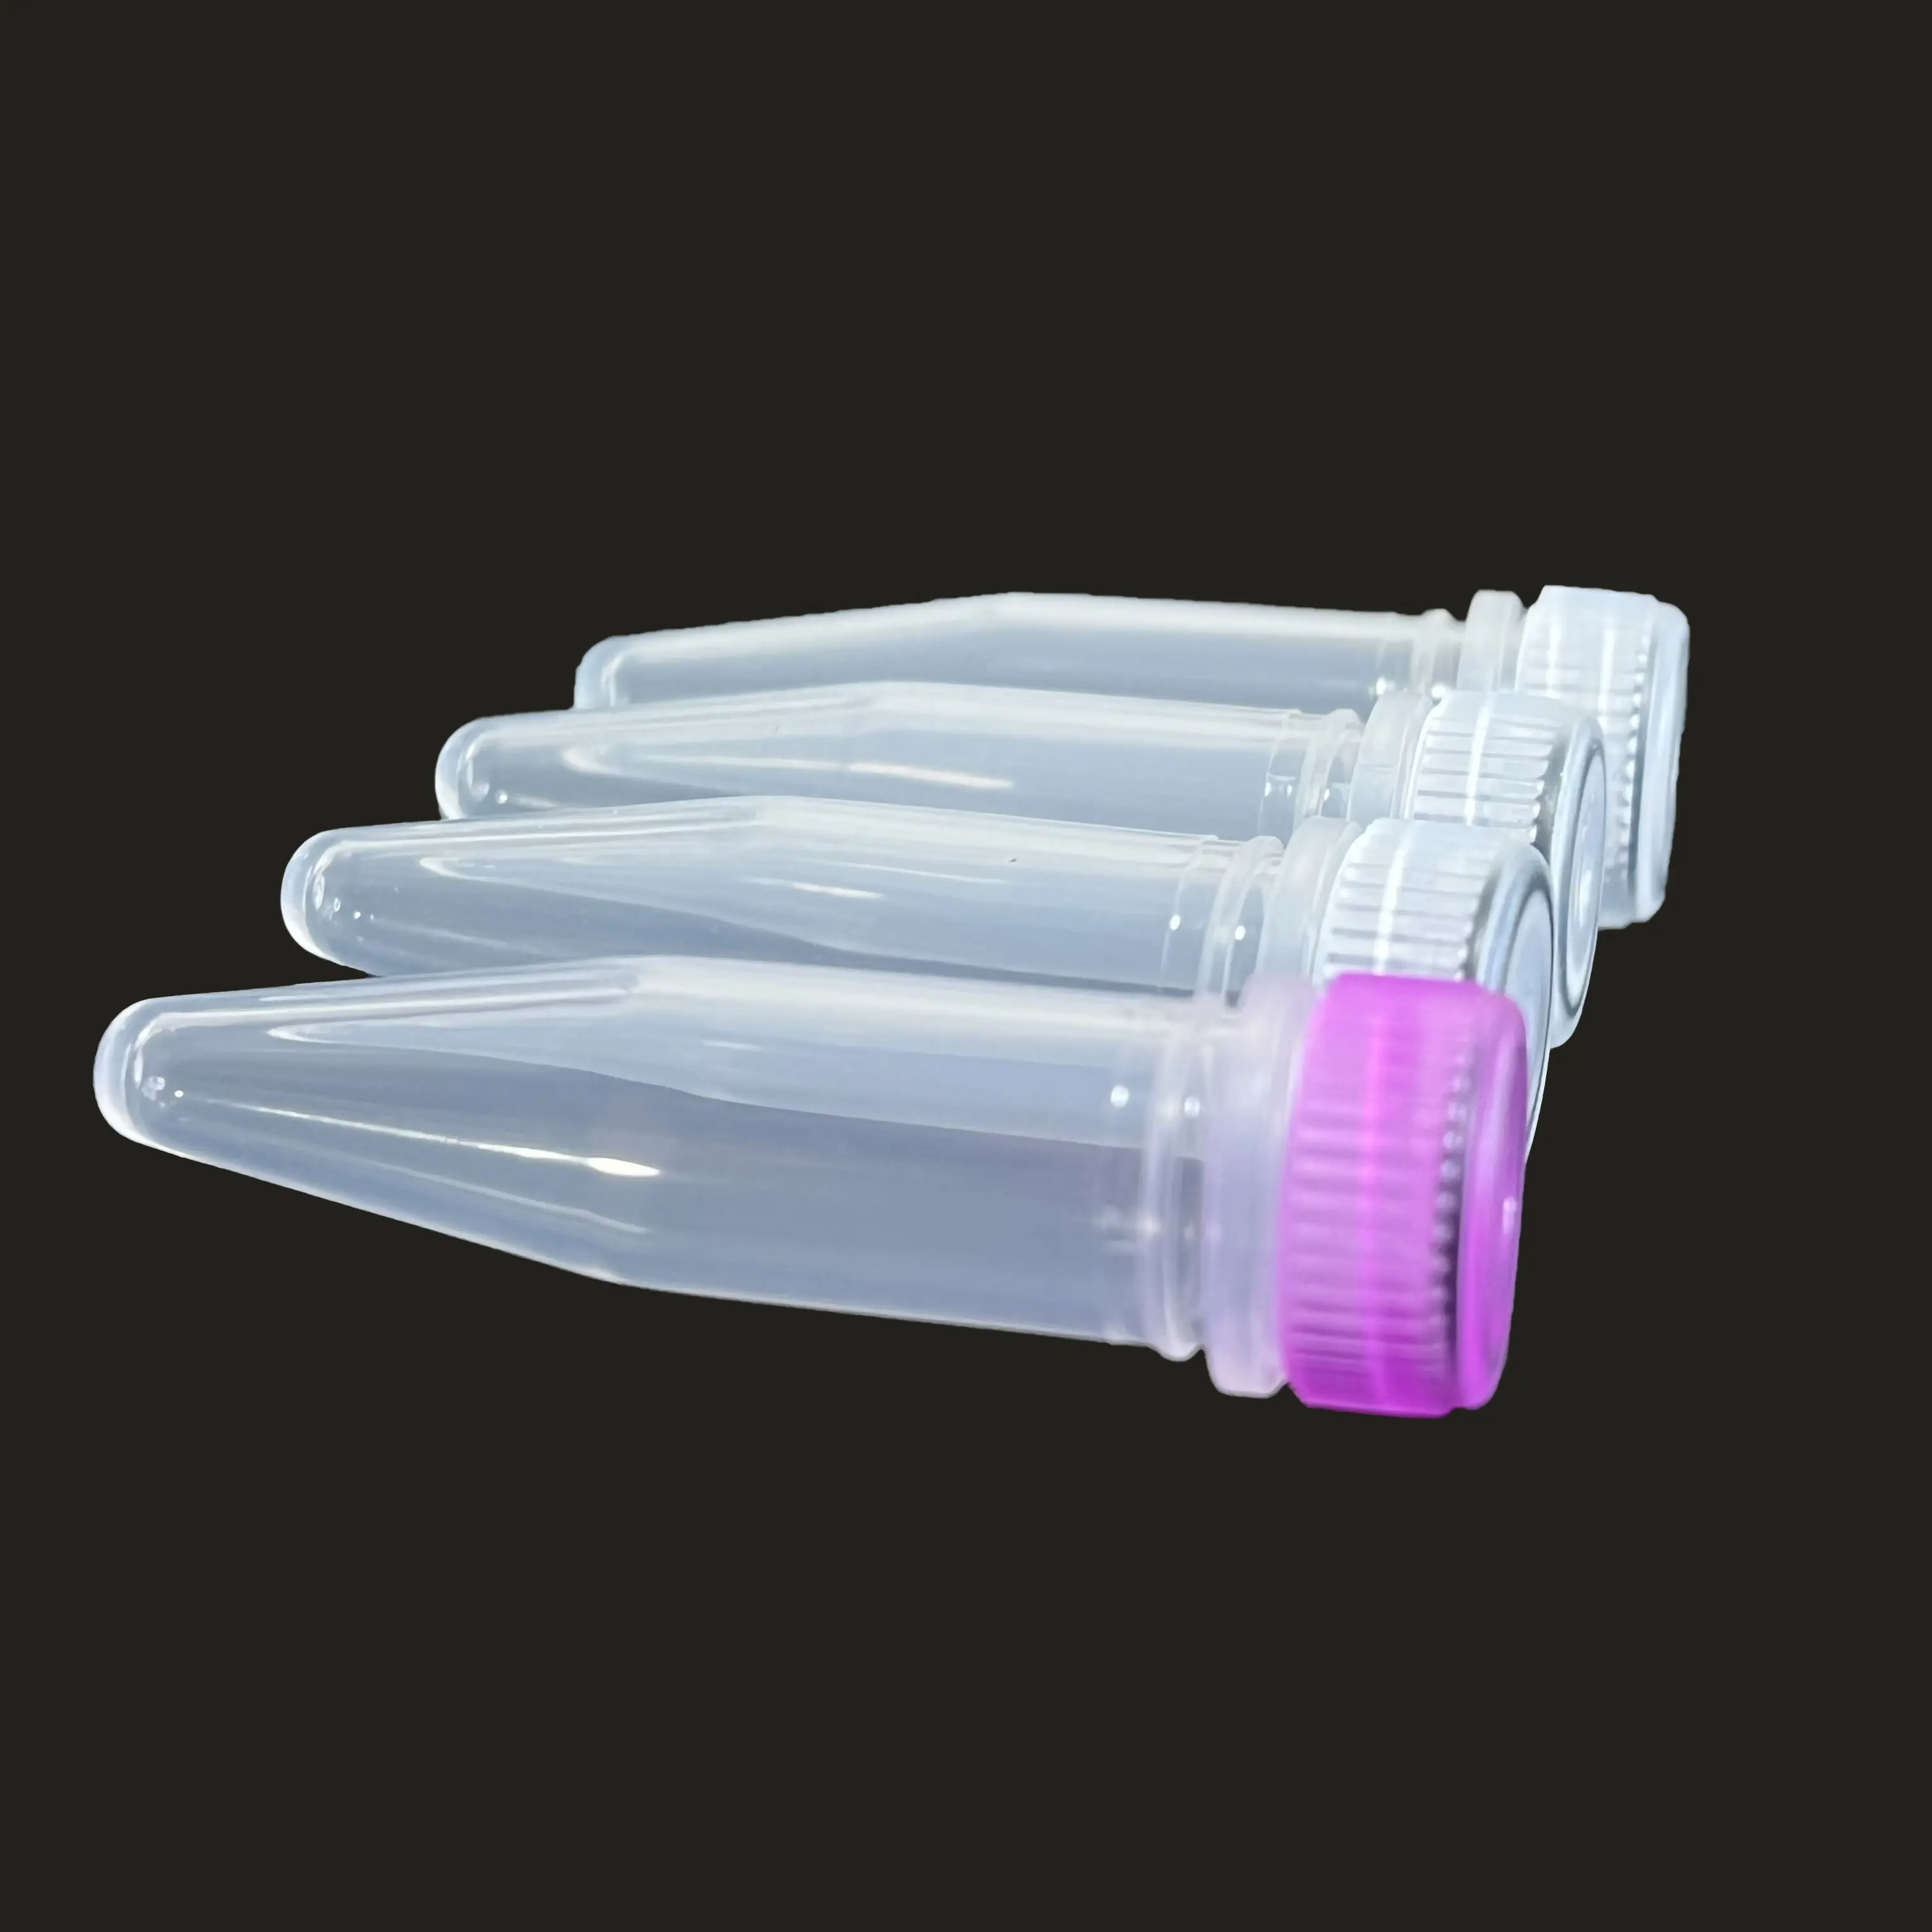 Gros laboratoire micro 1.5ml cryovial jetable en plastique conique centrifugeuse tube avec Couvercle